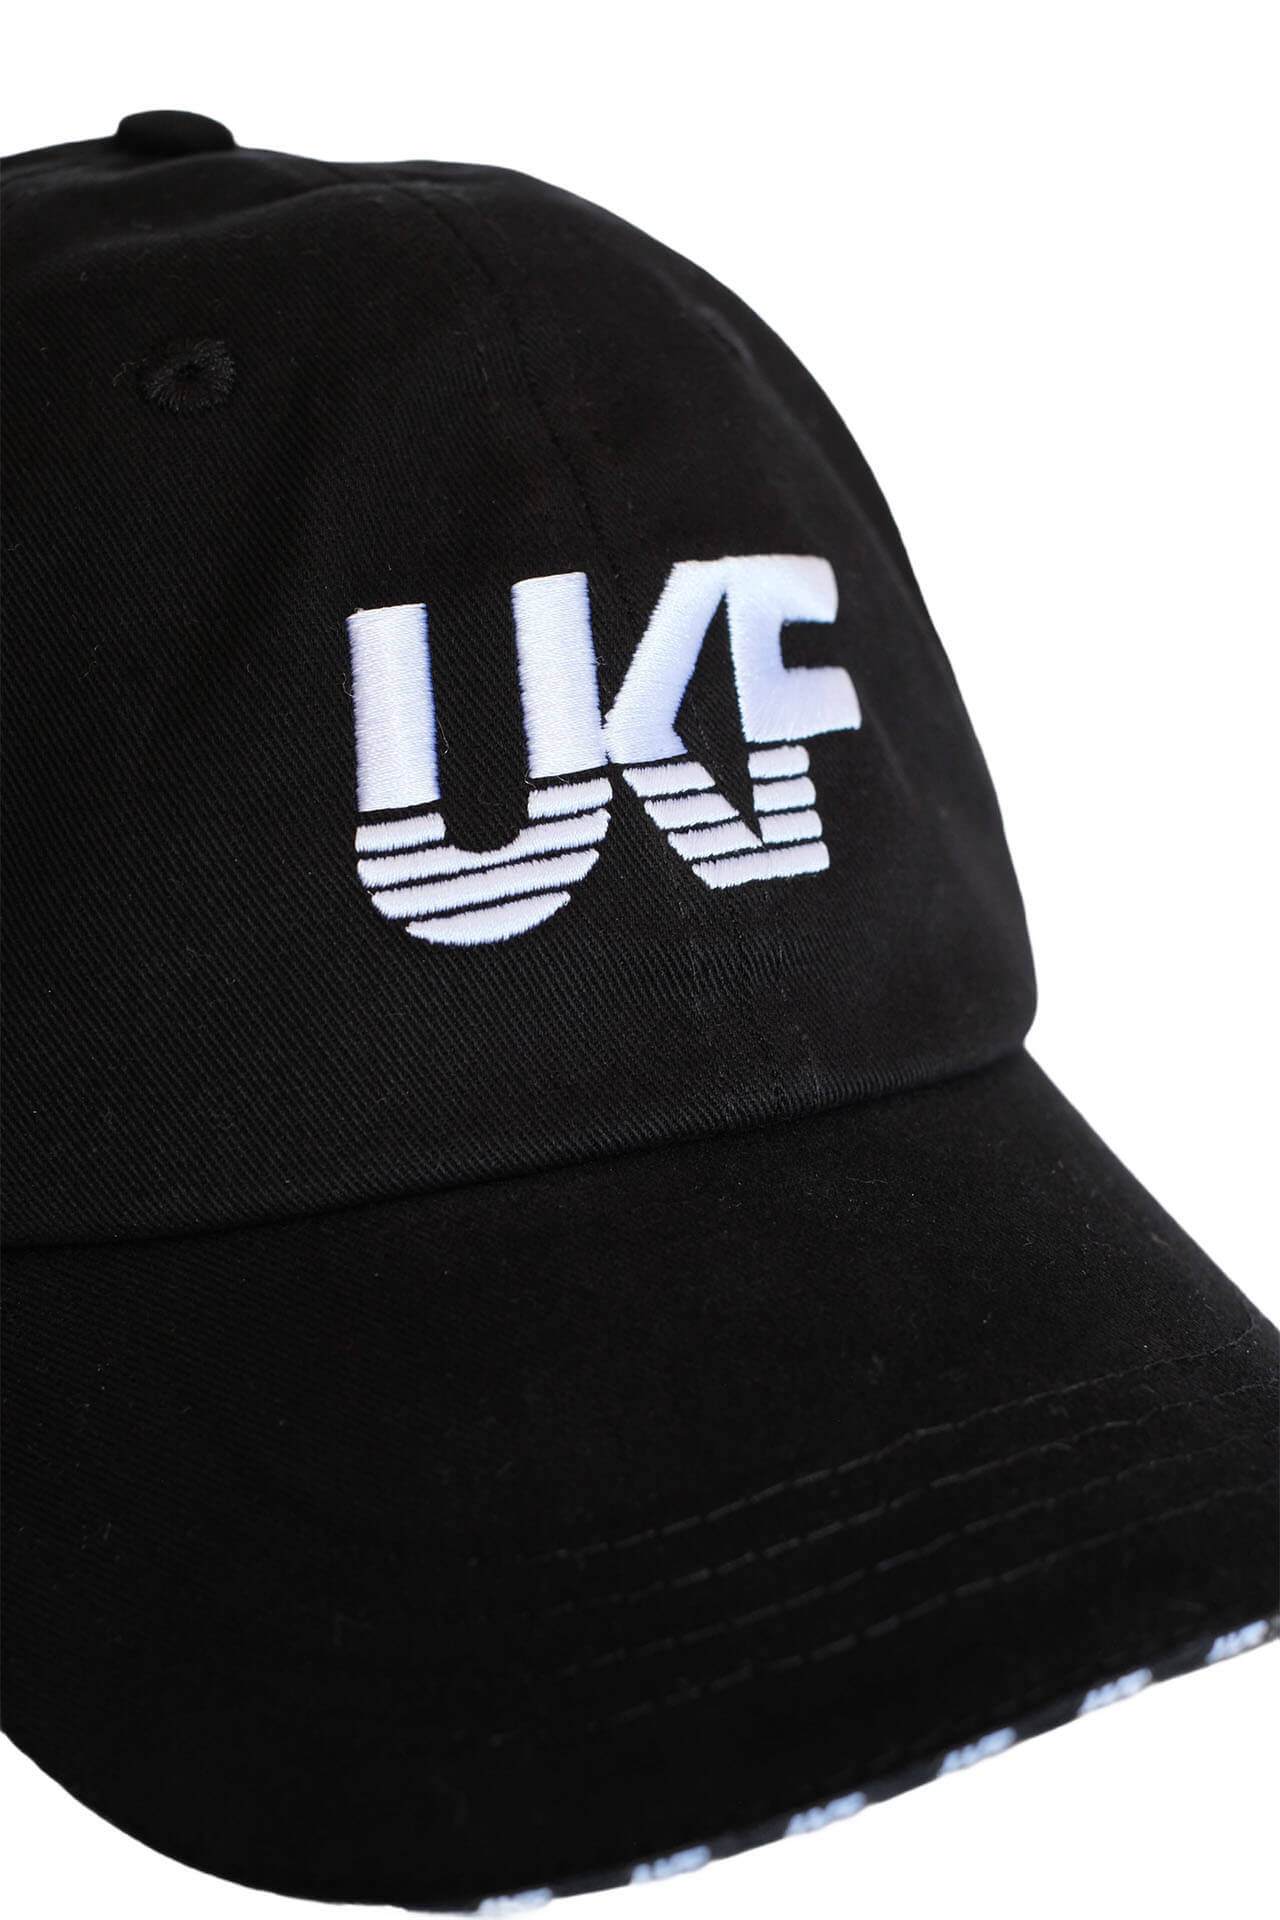 UKF Vintage Cap